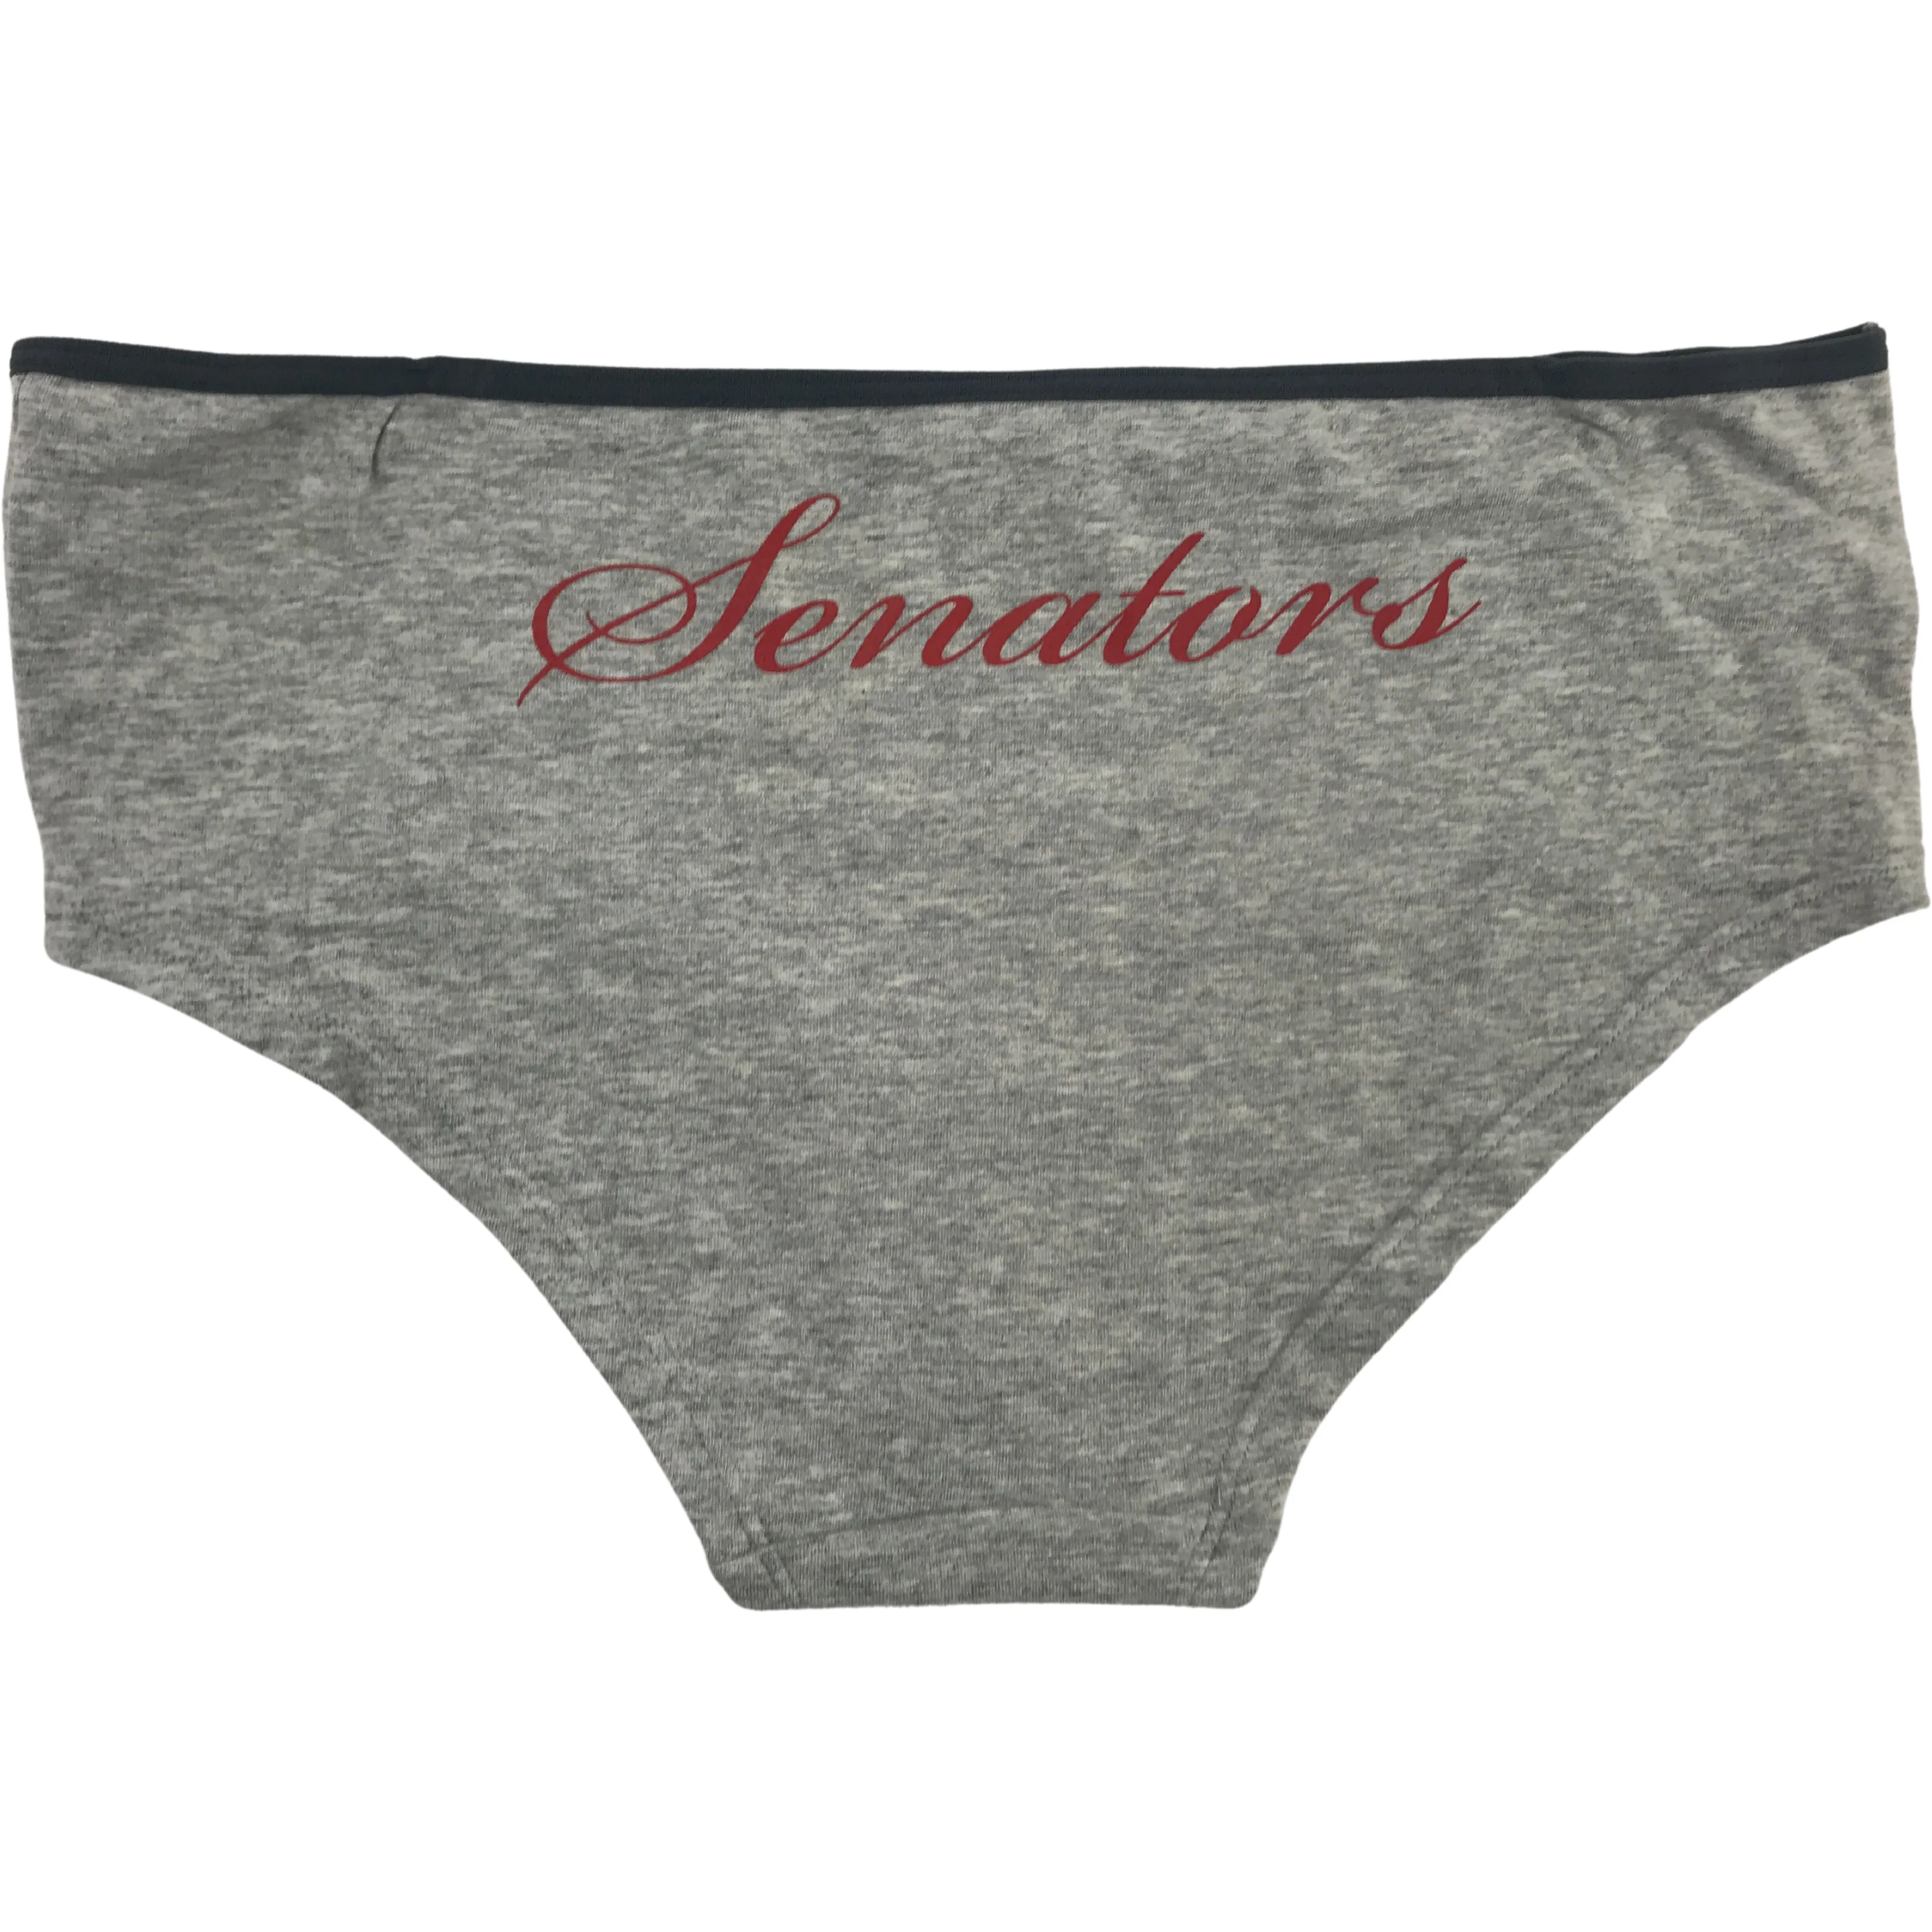 NHL Ottawa Senators Ladies Boycut Underwear / 2 Pack / Panties / Red & Grey / Ottawa Senators Logo / Various Sizes